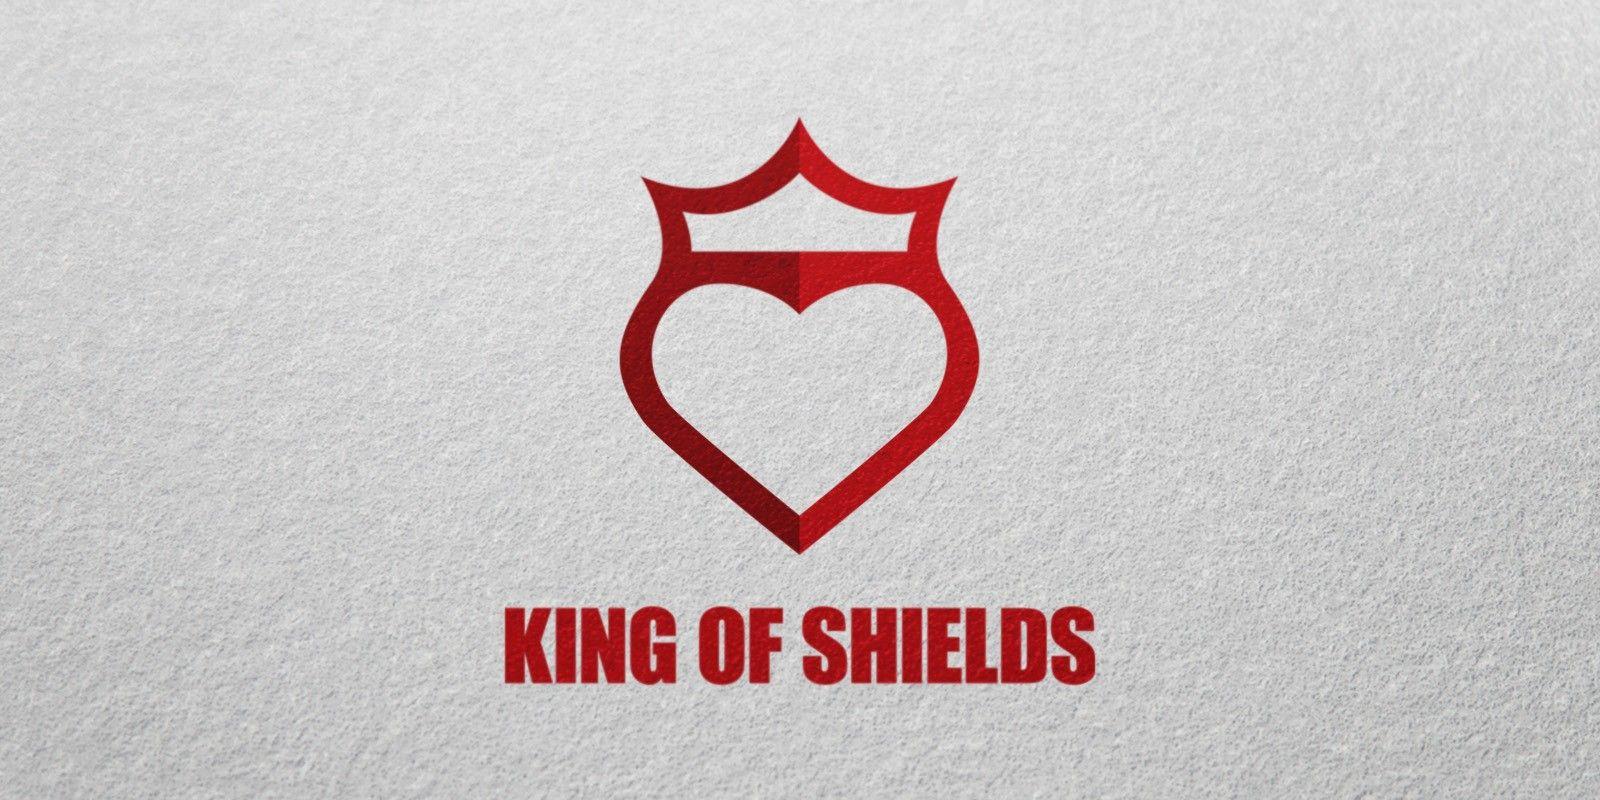 Shields Logo - King of Shields